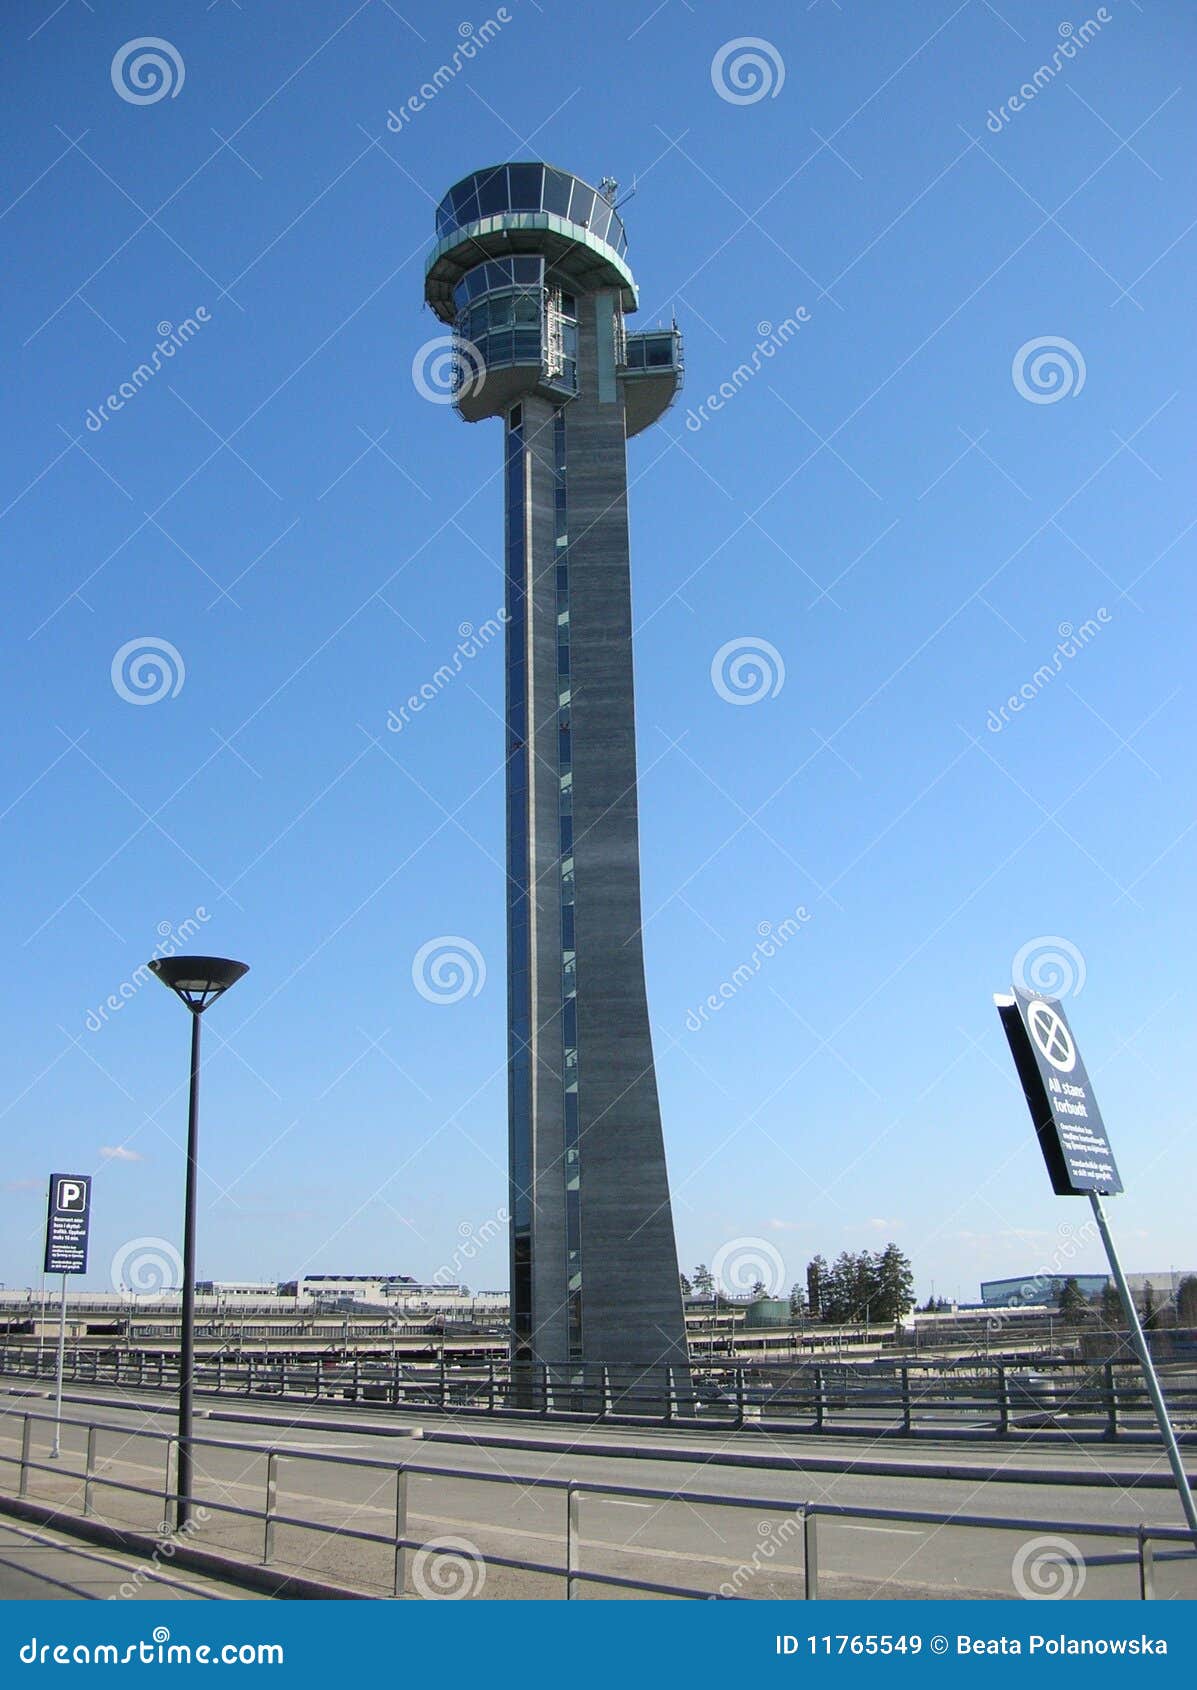 flights control tower